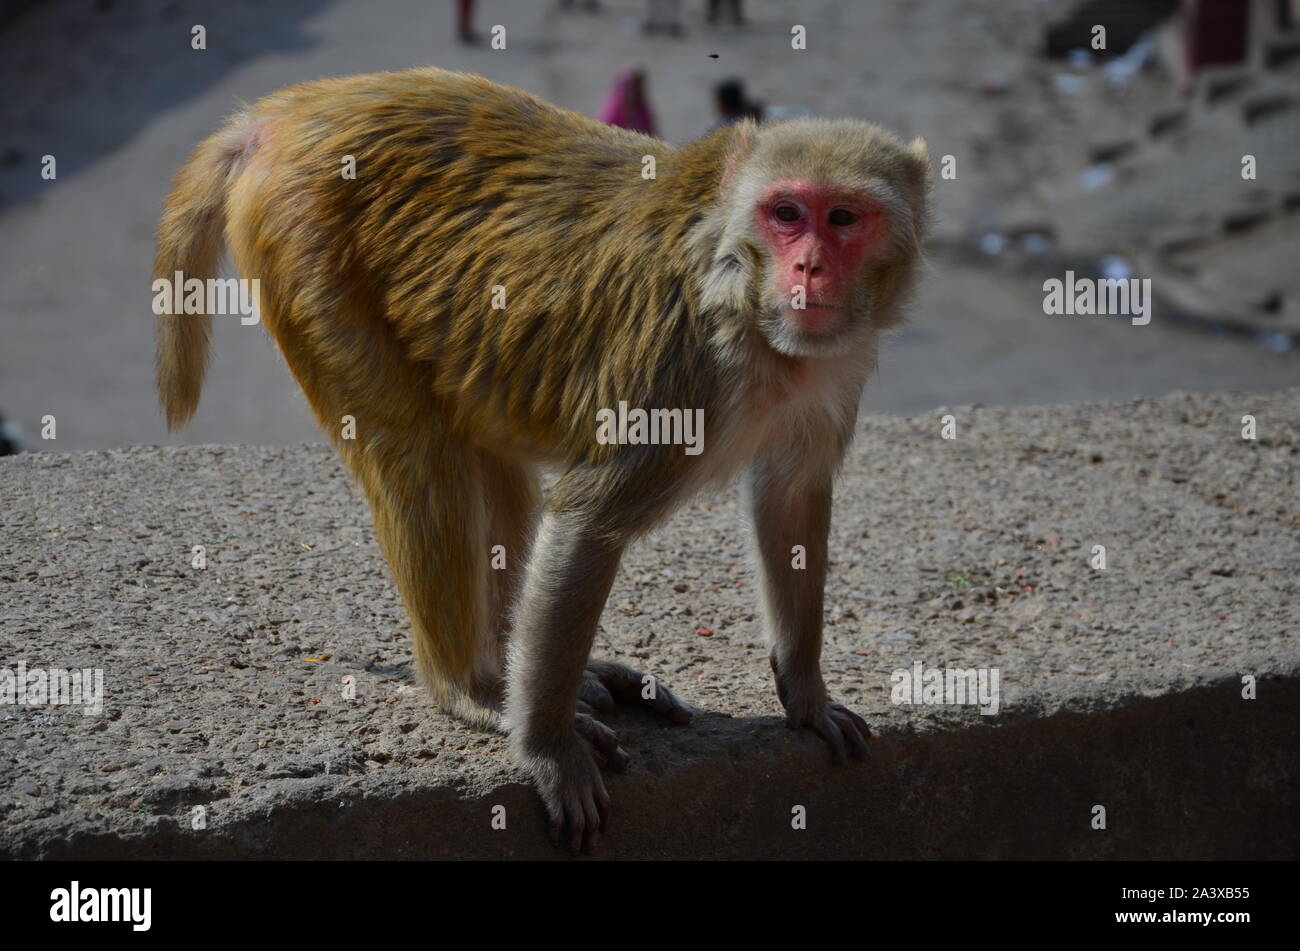 Little monkey on a rock Stock Photo